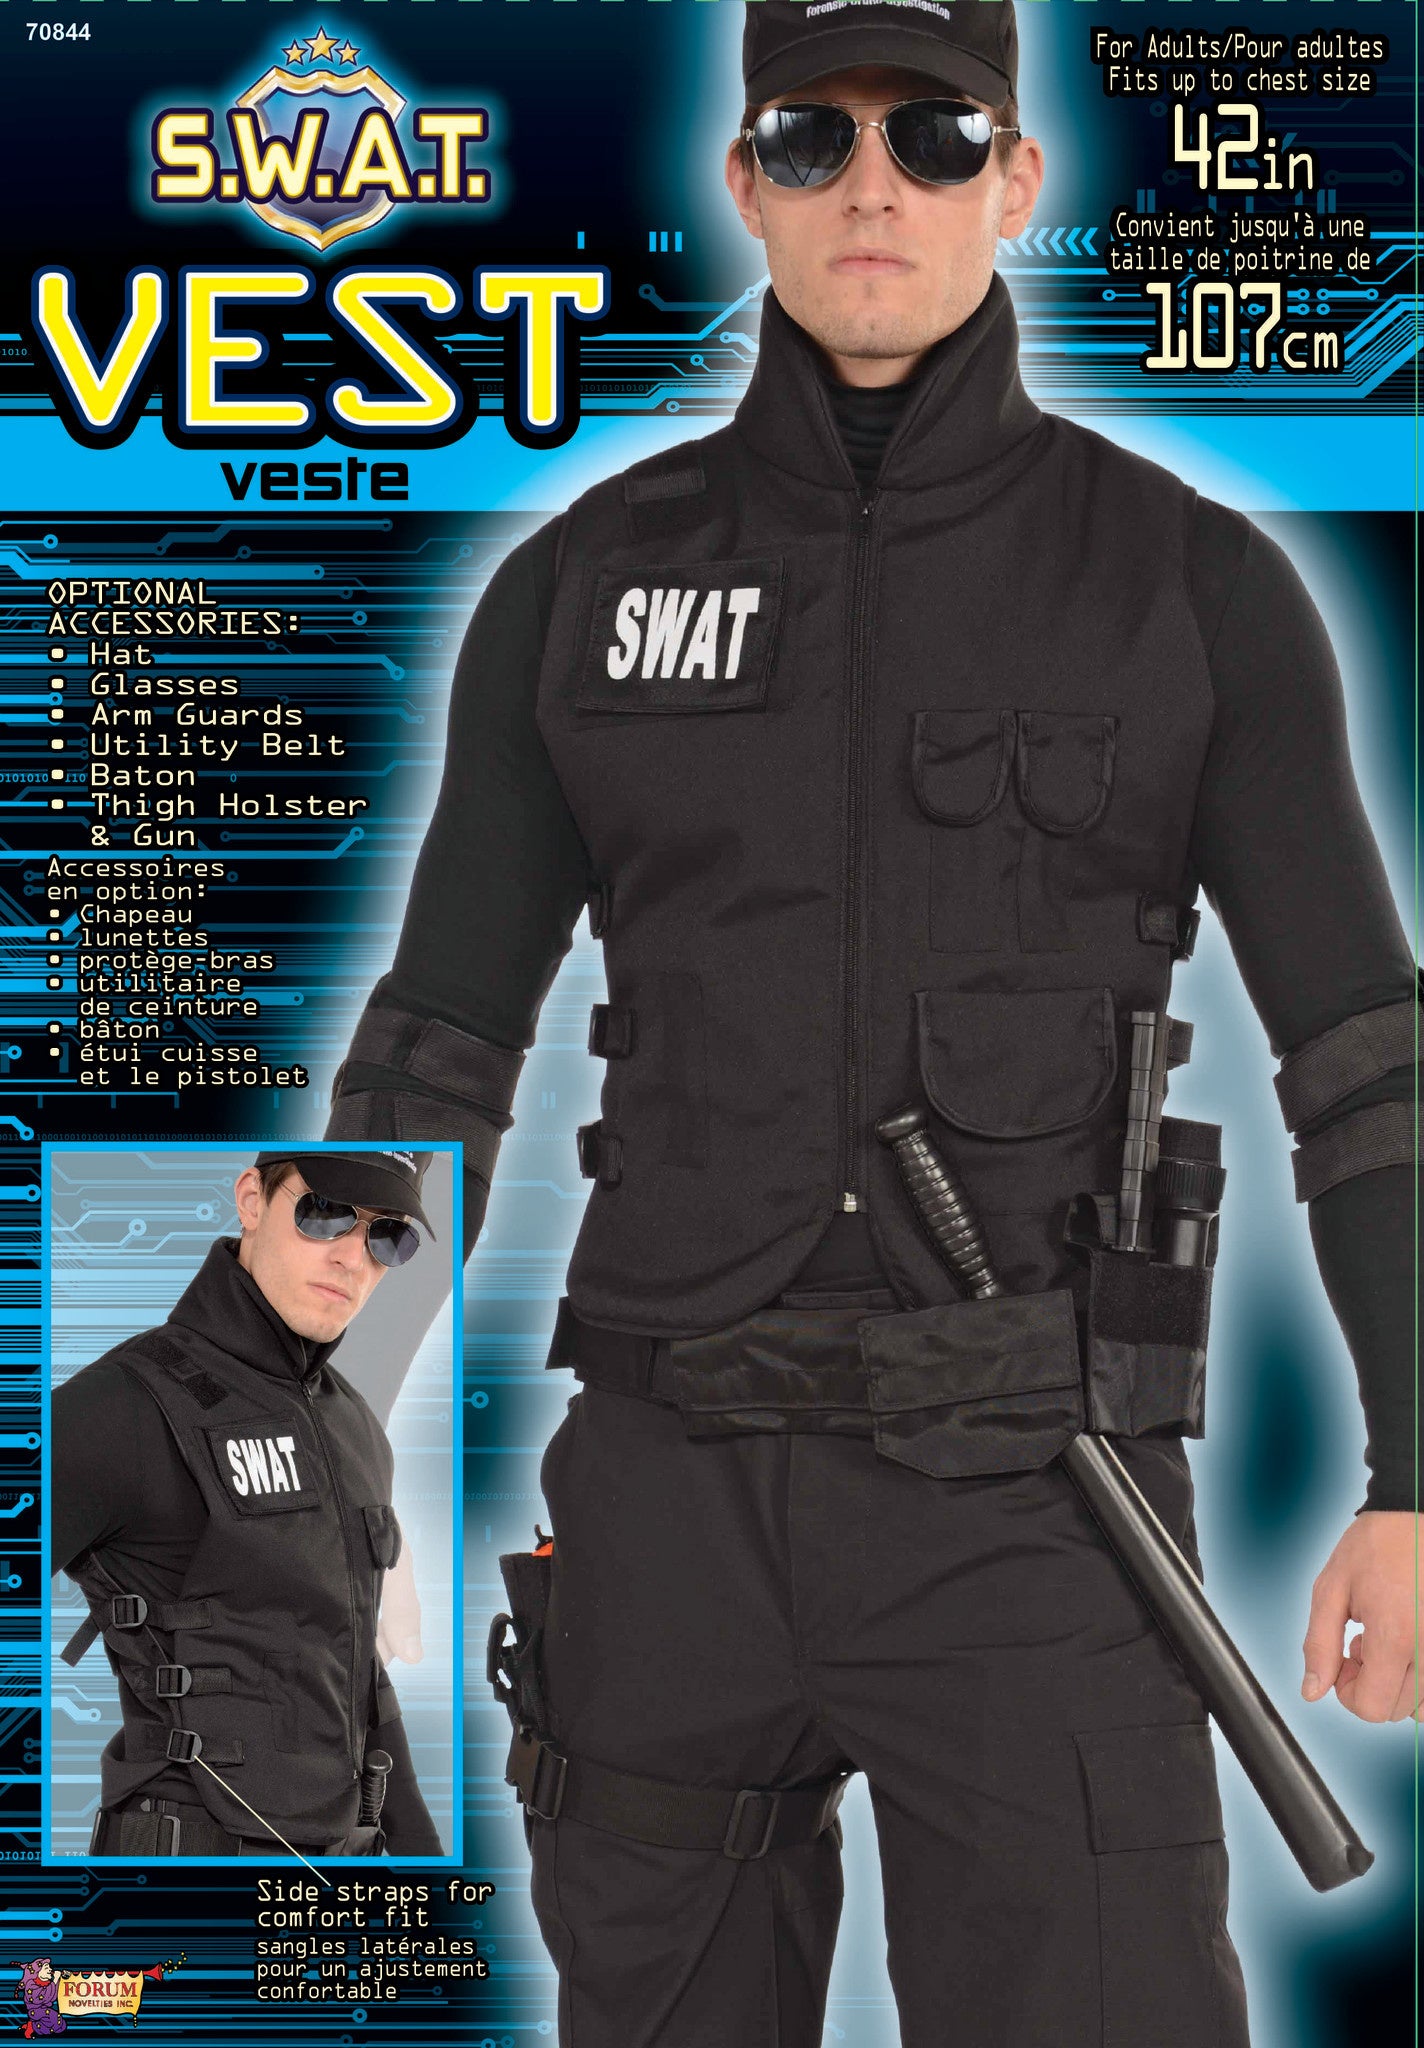 S.W.A.T. Vest: Standard